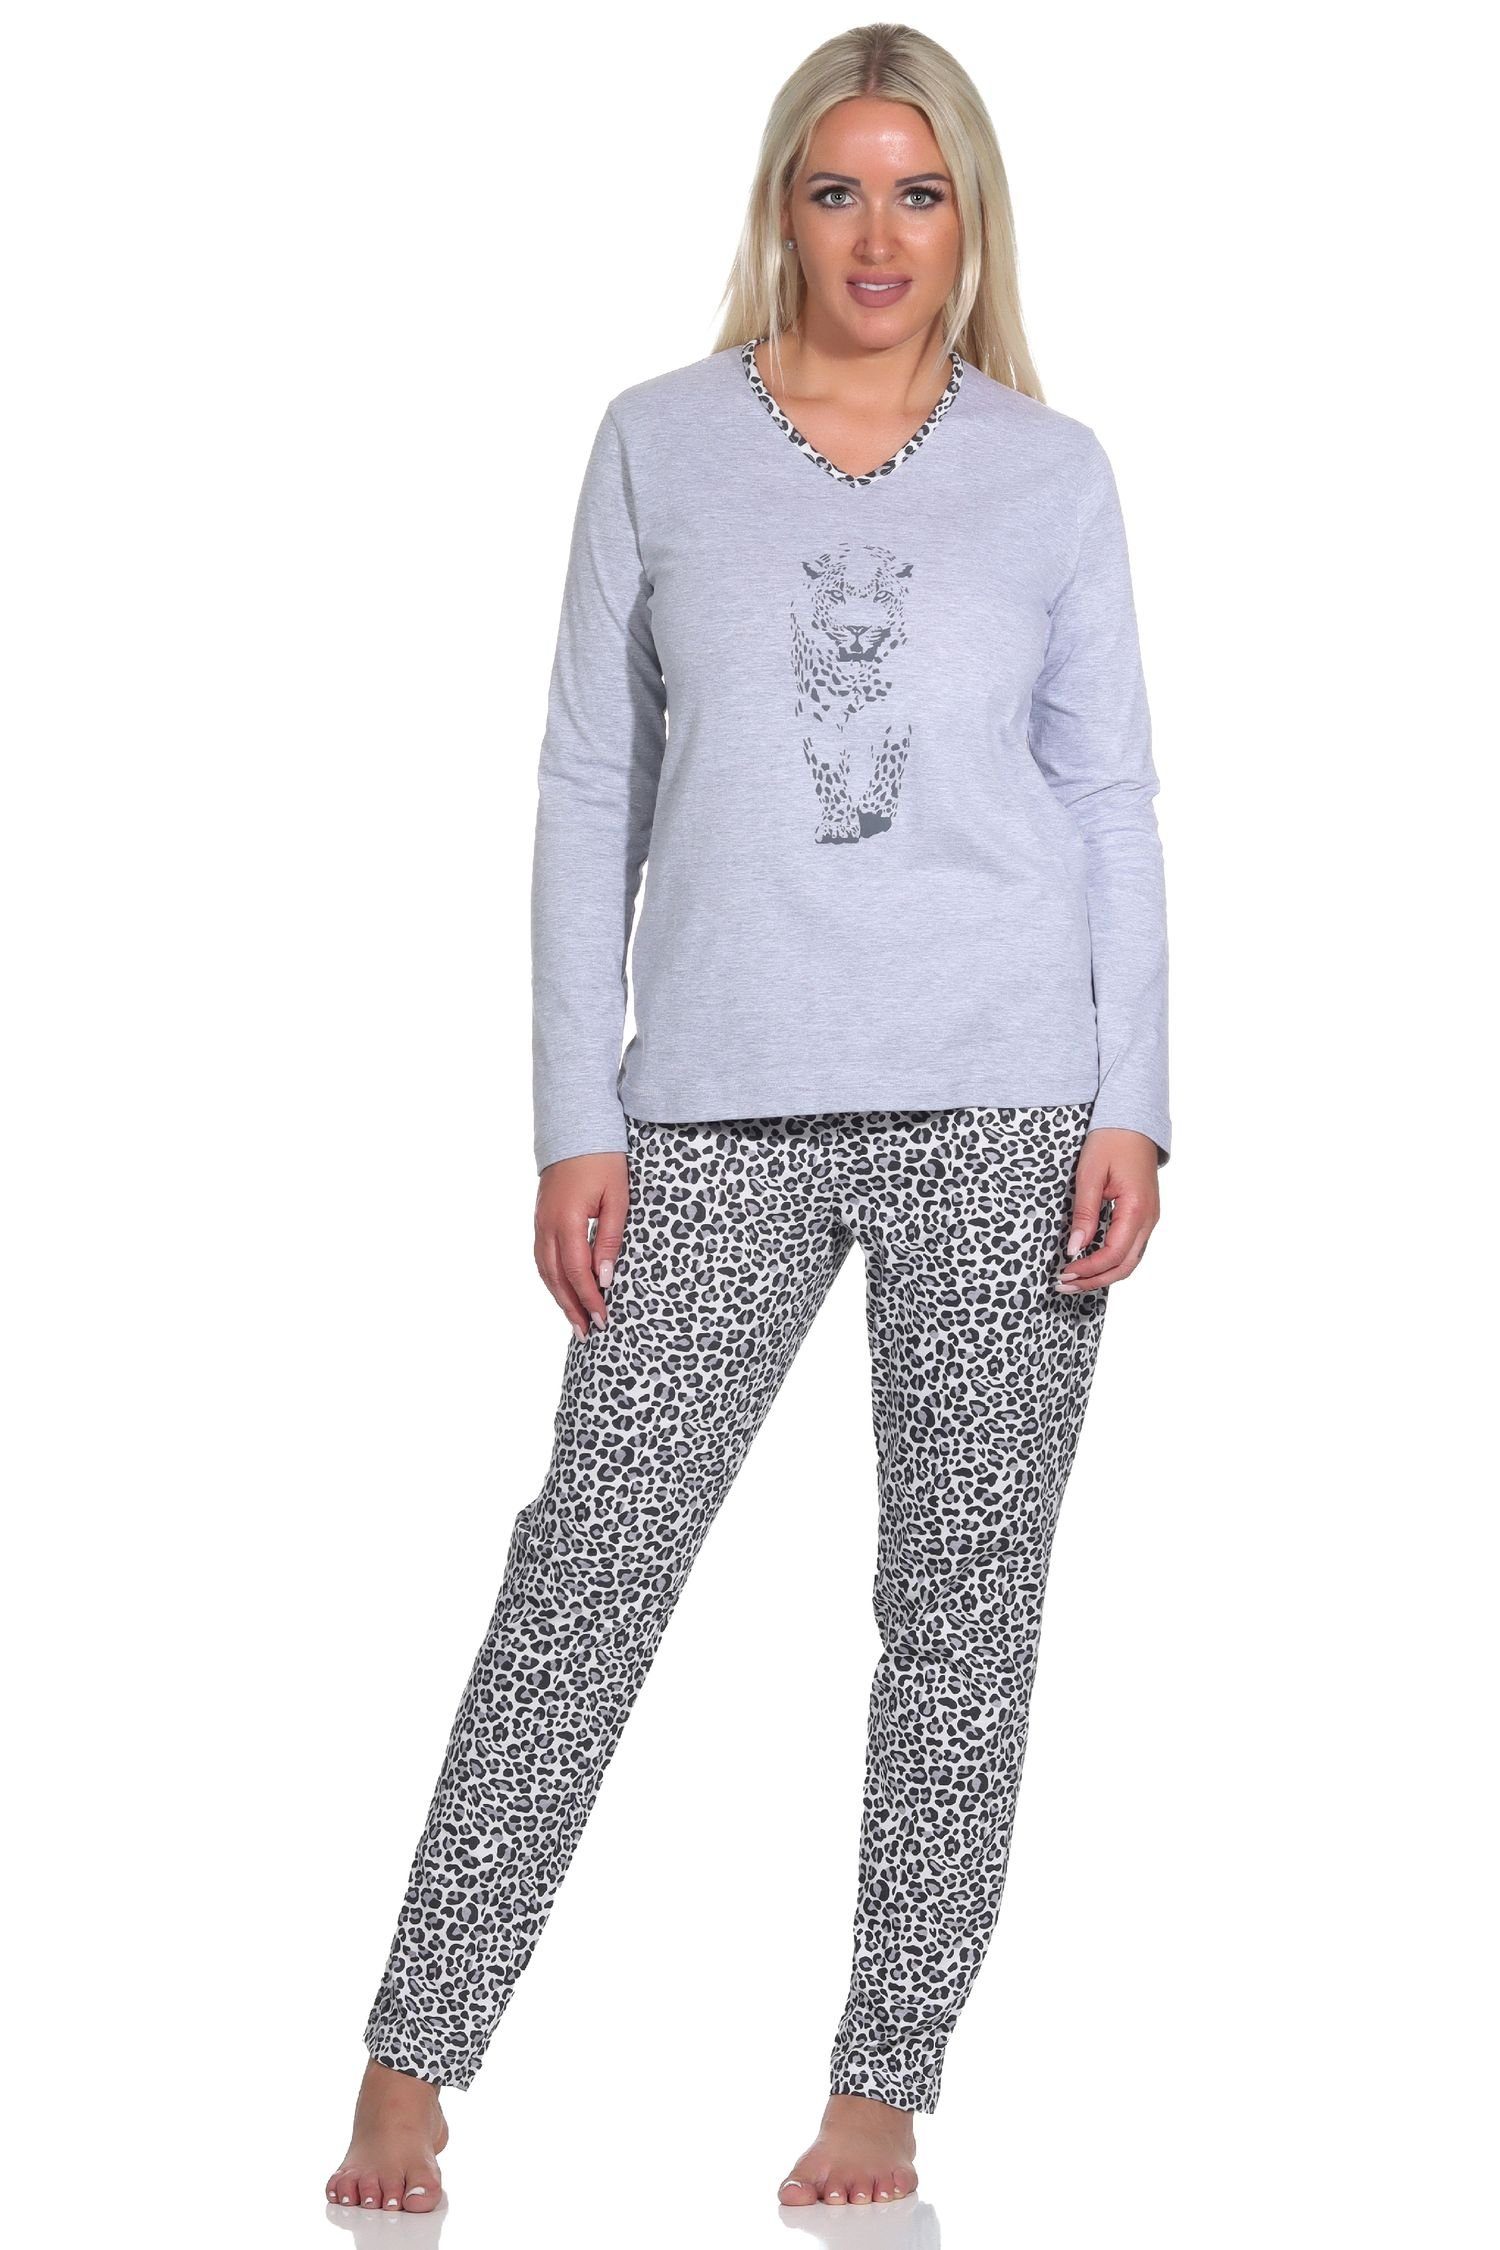 Damen Tiermotiv, Animal-Print-Look Hose Langarm grau-mel. Schlafanzug Pyjama im mit Normann